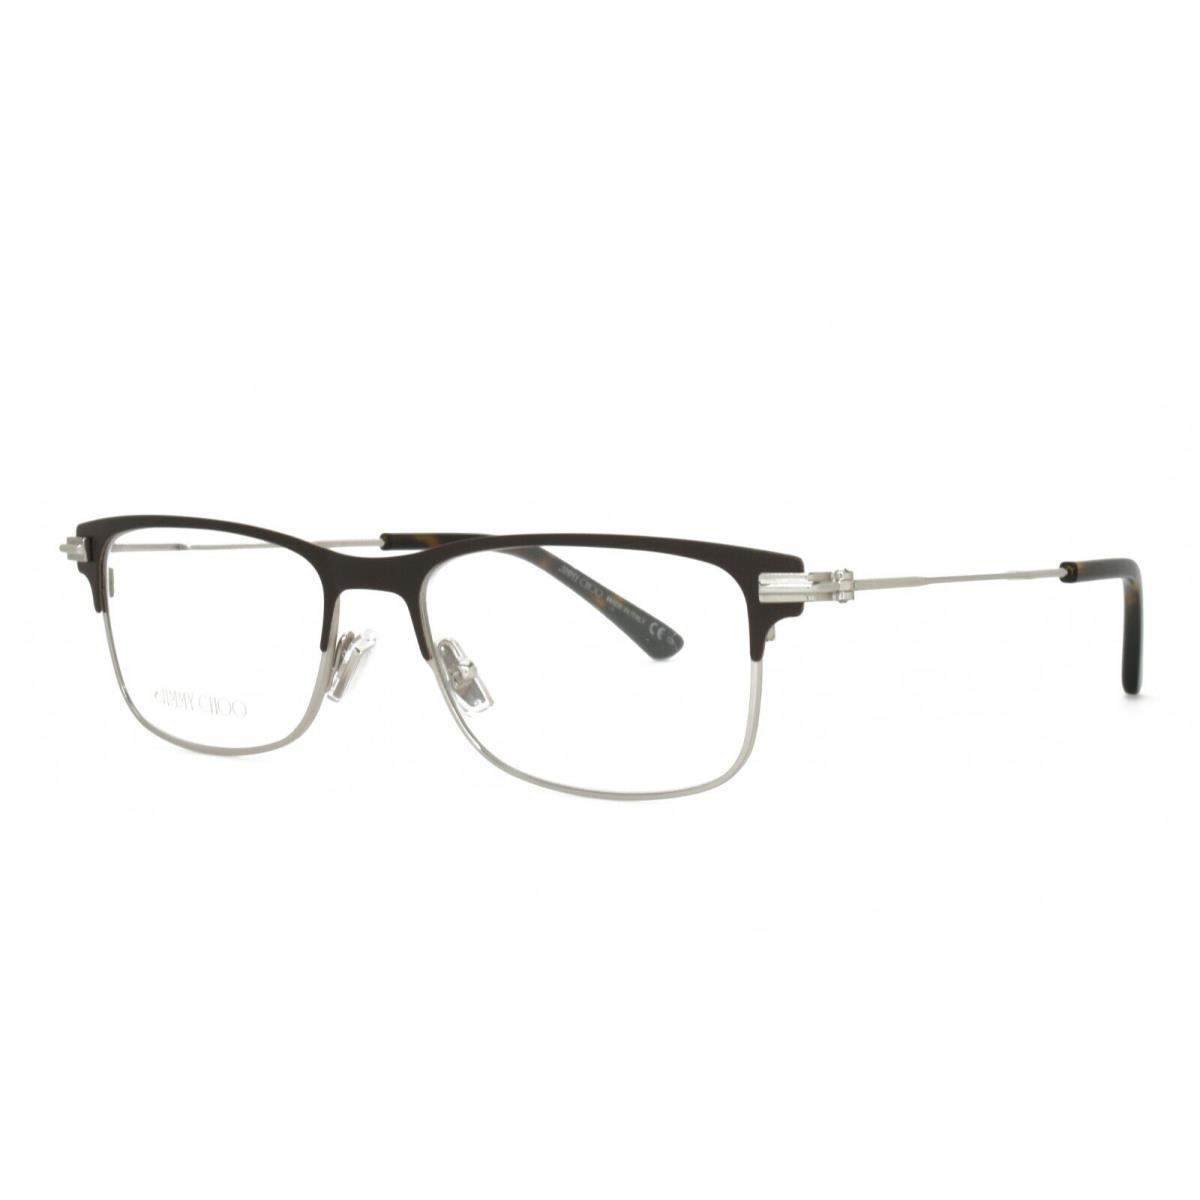 Jimmy Choo Unisex Eyeglasses JC 006 09Q 54-17-150 Brown Silver